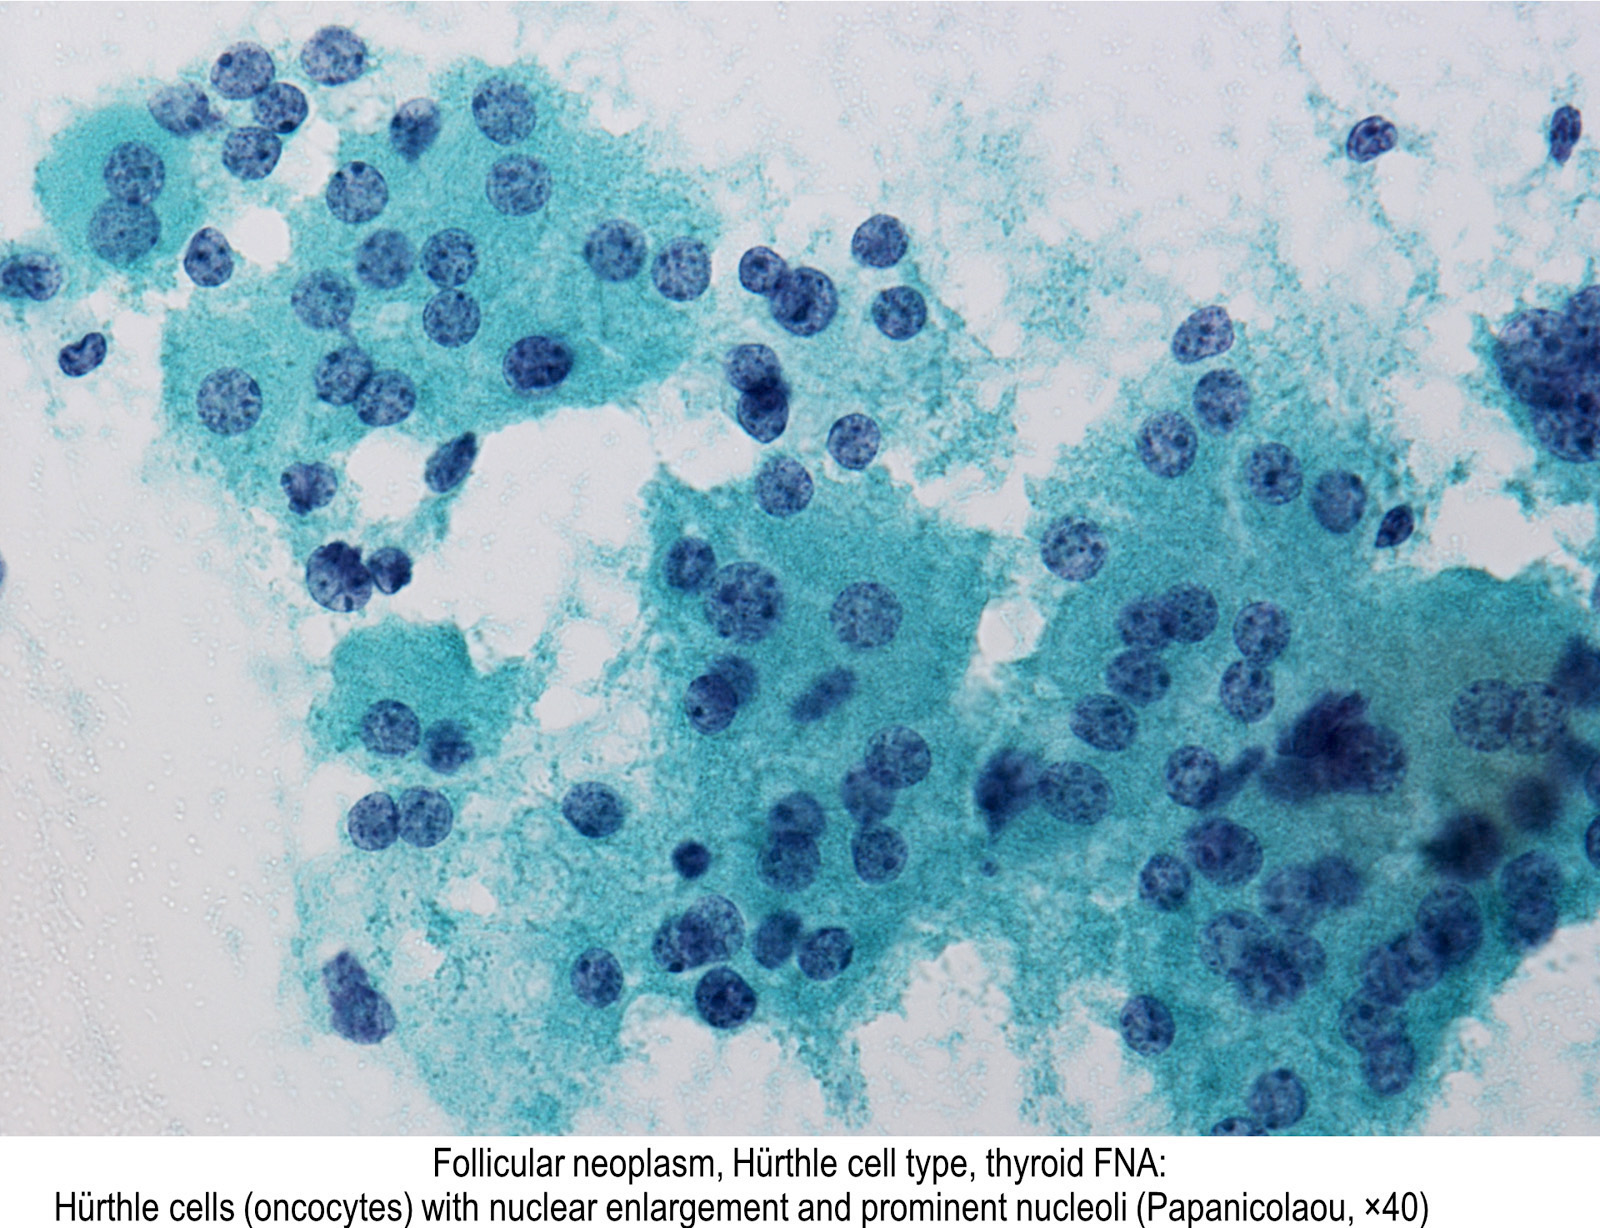 Pathology Outlines - Hürthle cell neoplasm